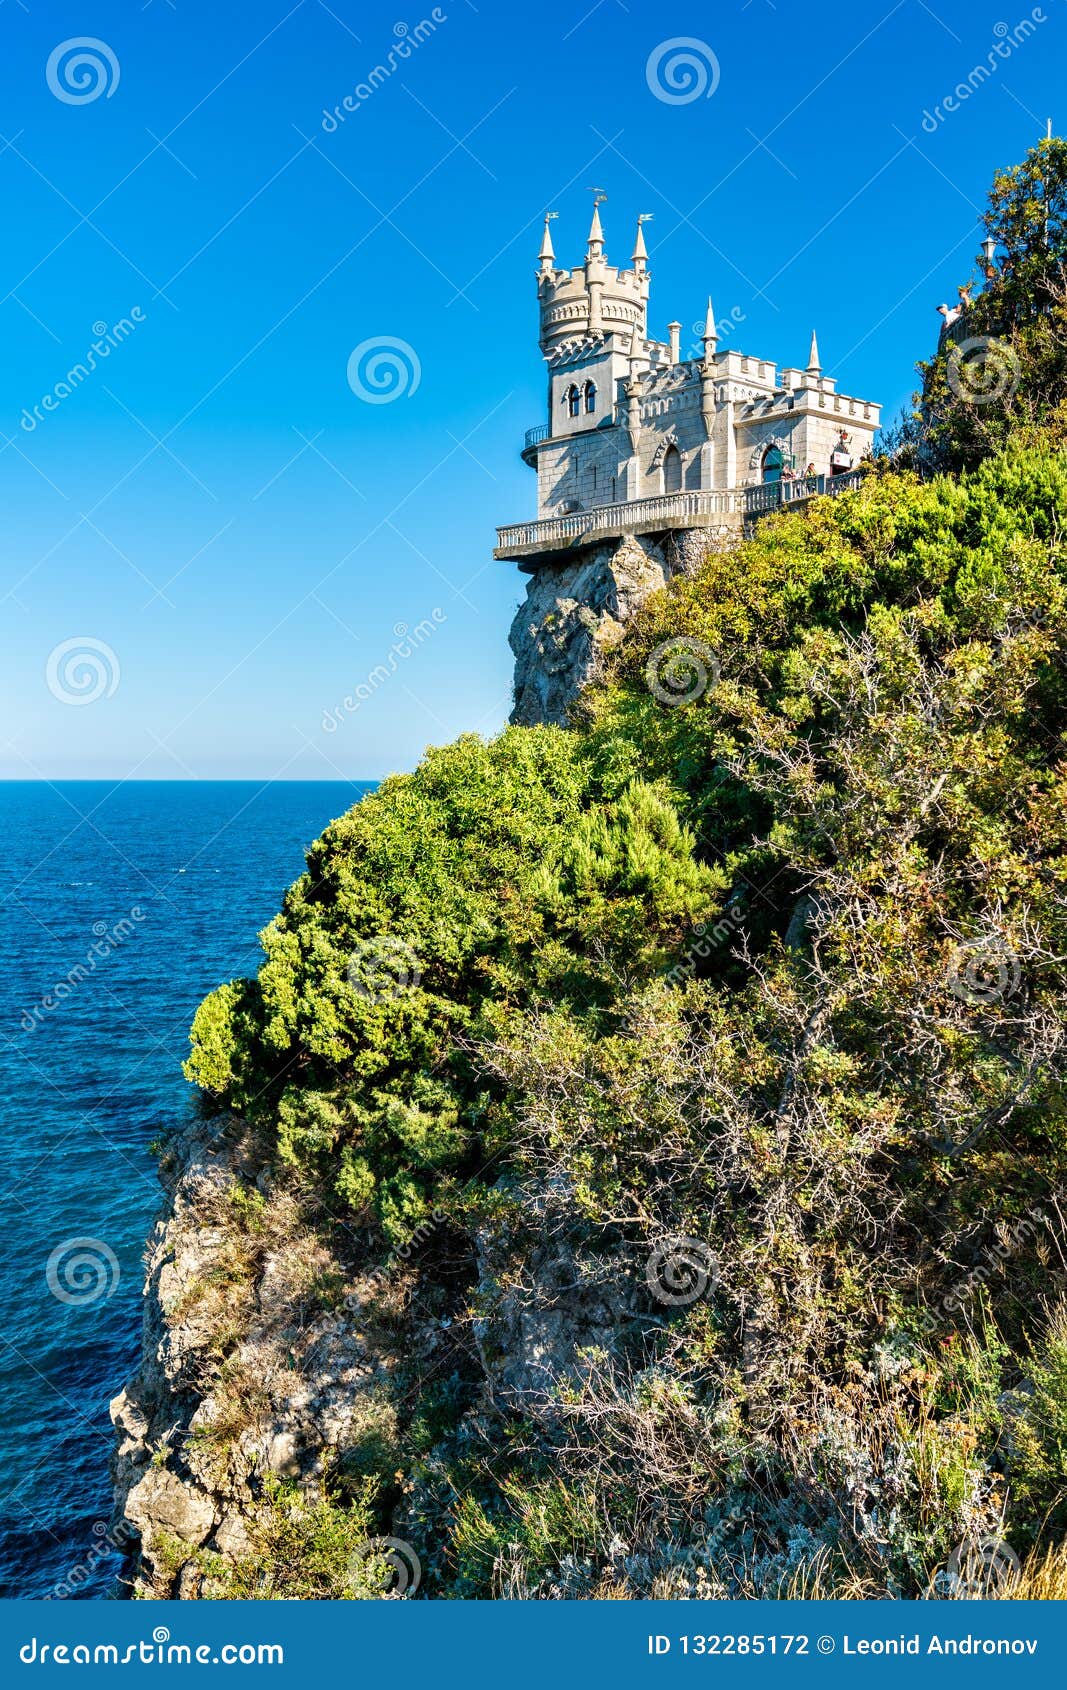 the swallows nest castle near yalta in crimea